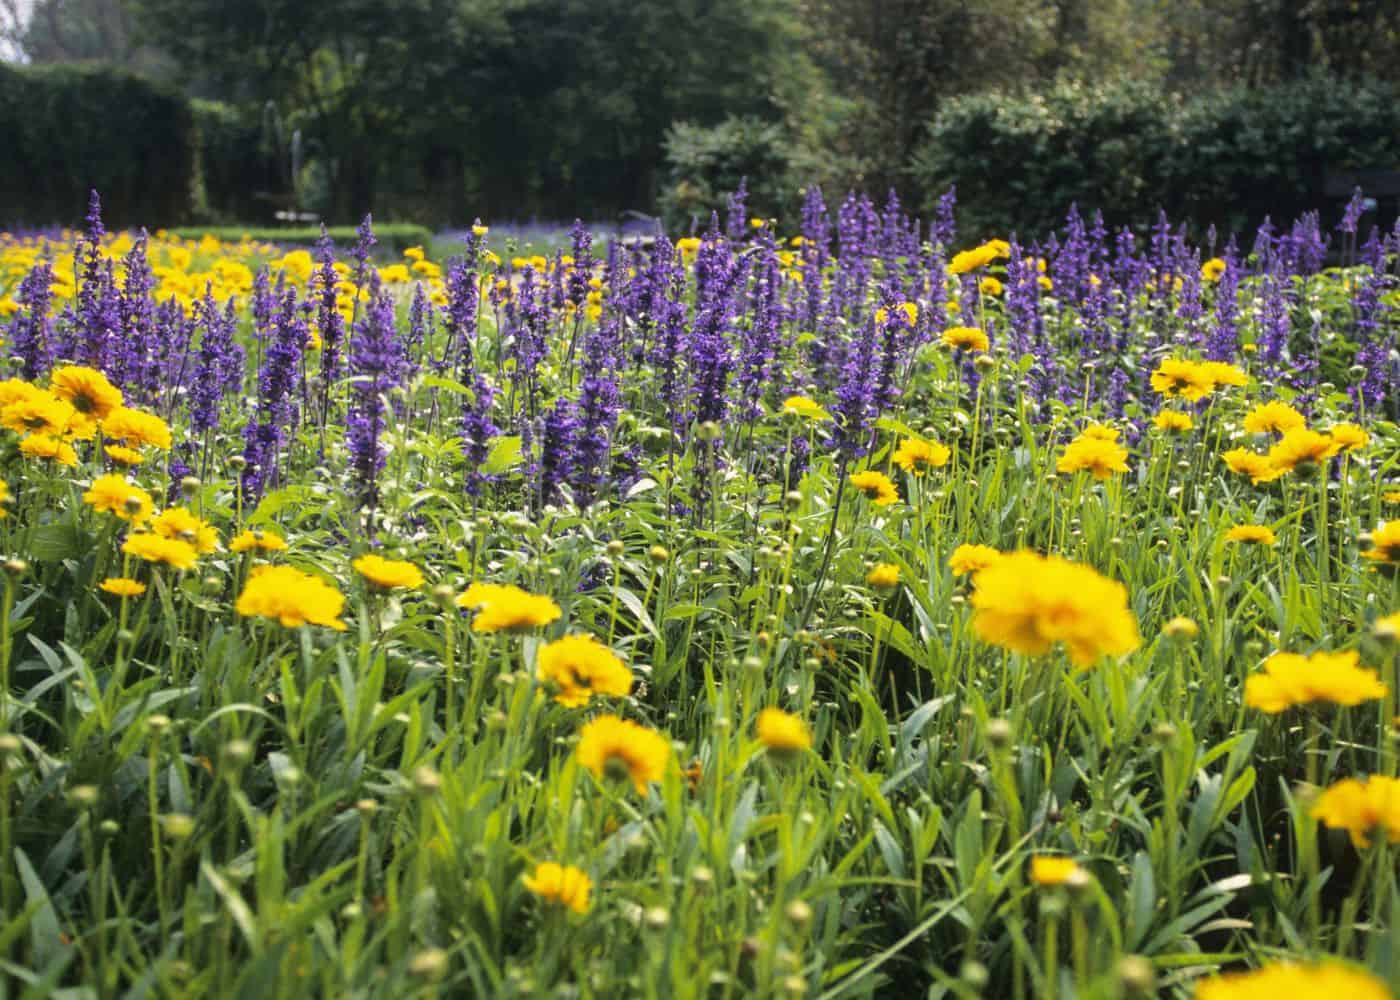 Yellow marigold flowers growing around purple lavender